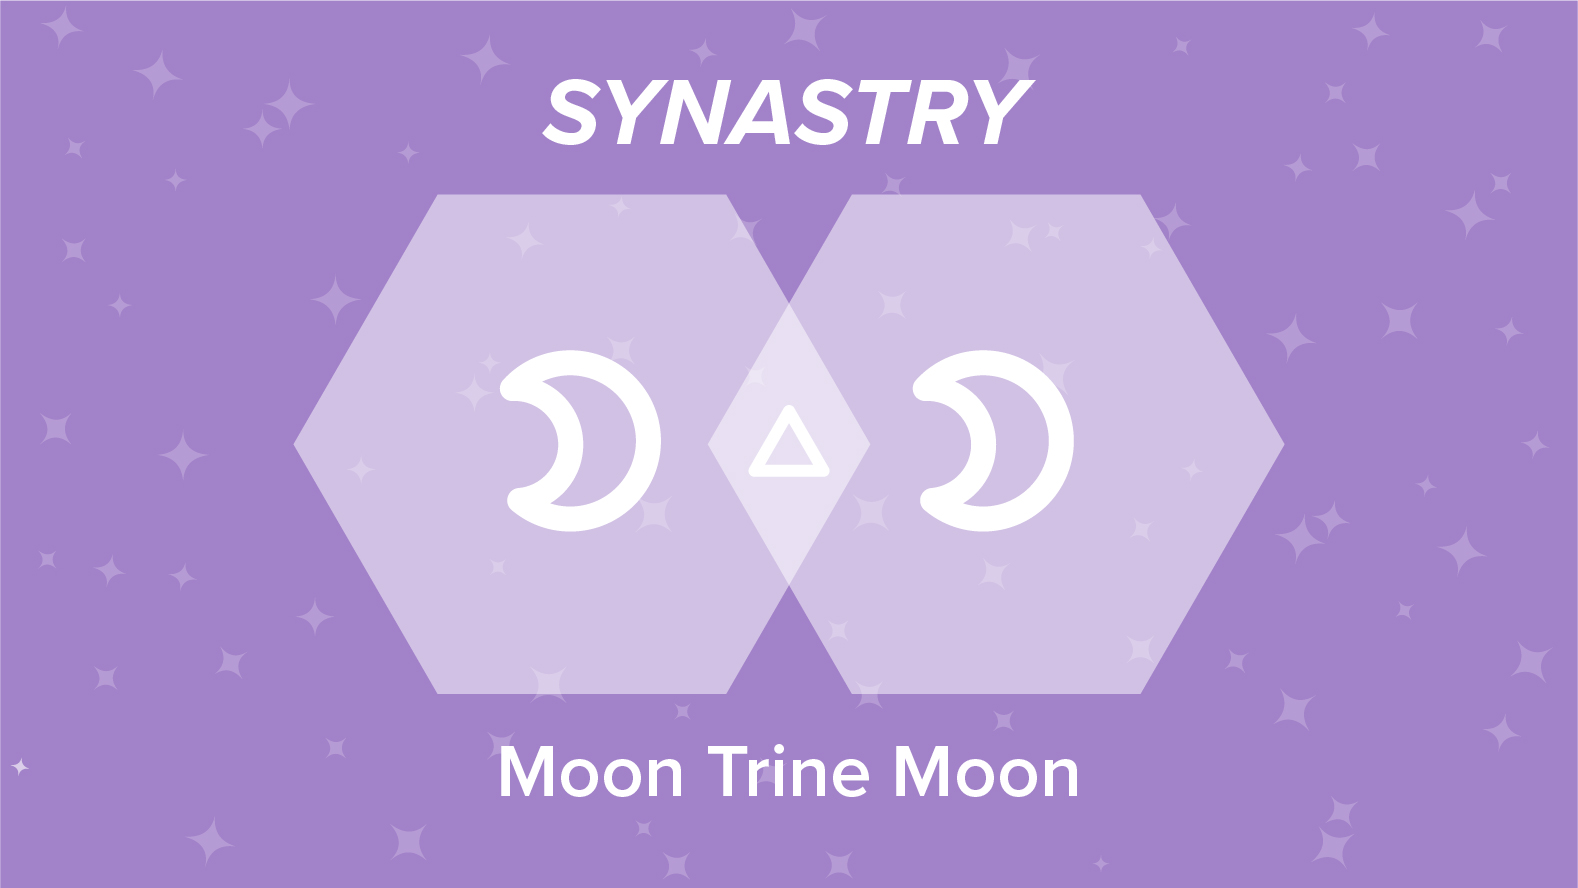 Moon Trine Moon Synastry